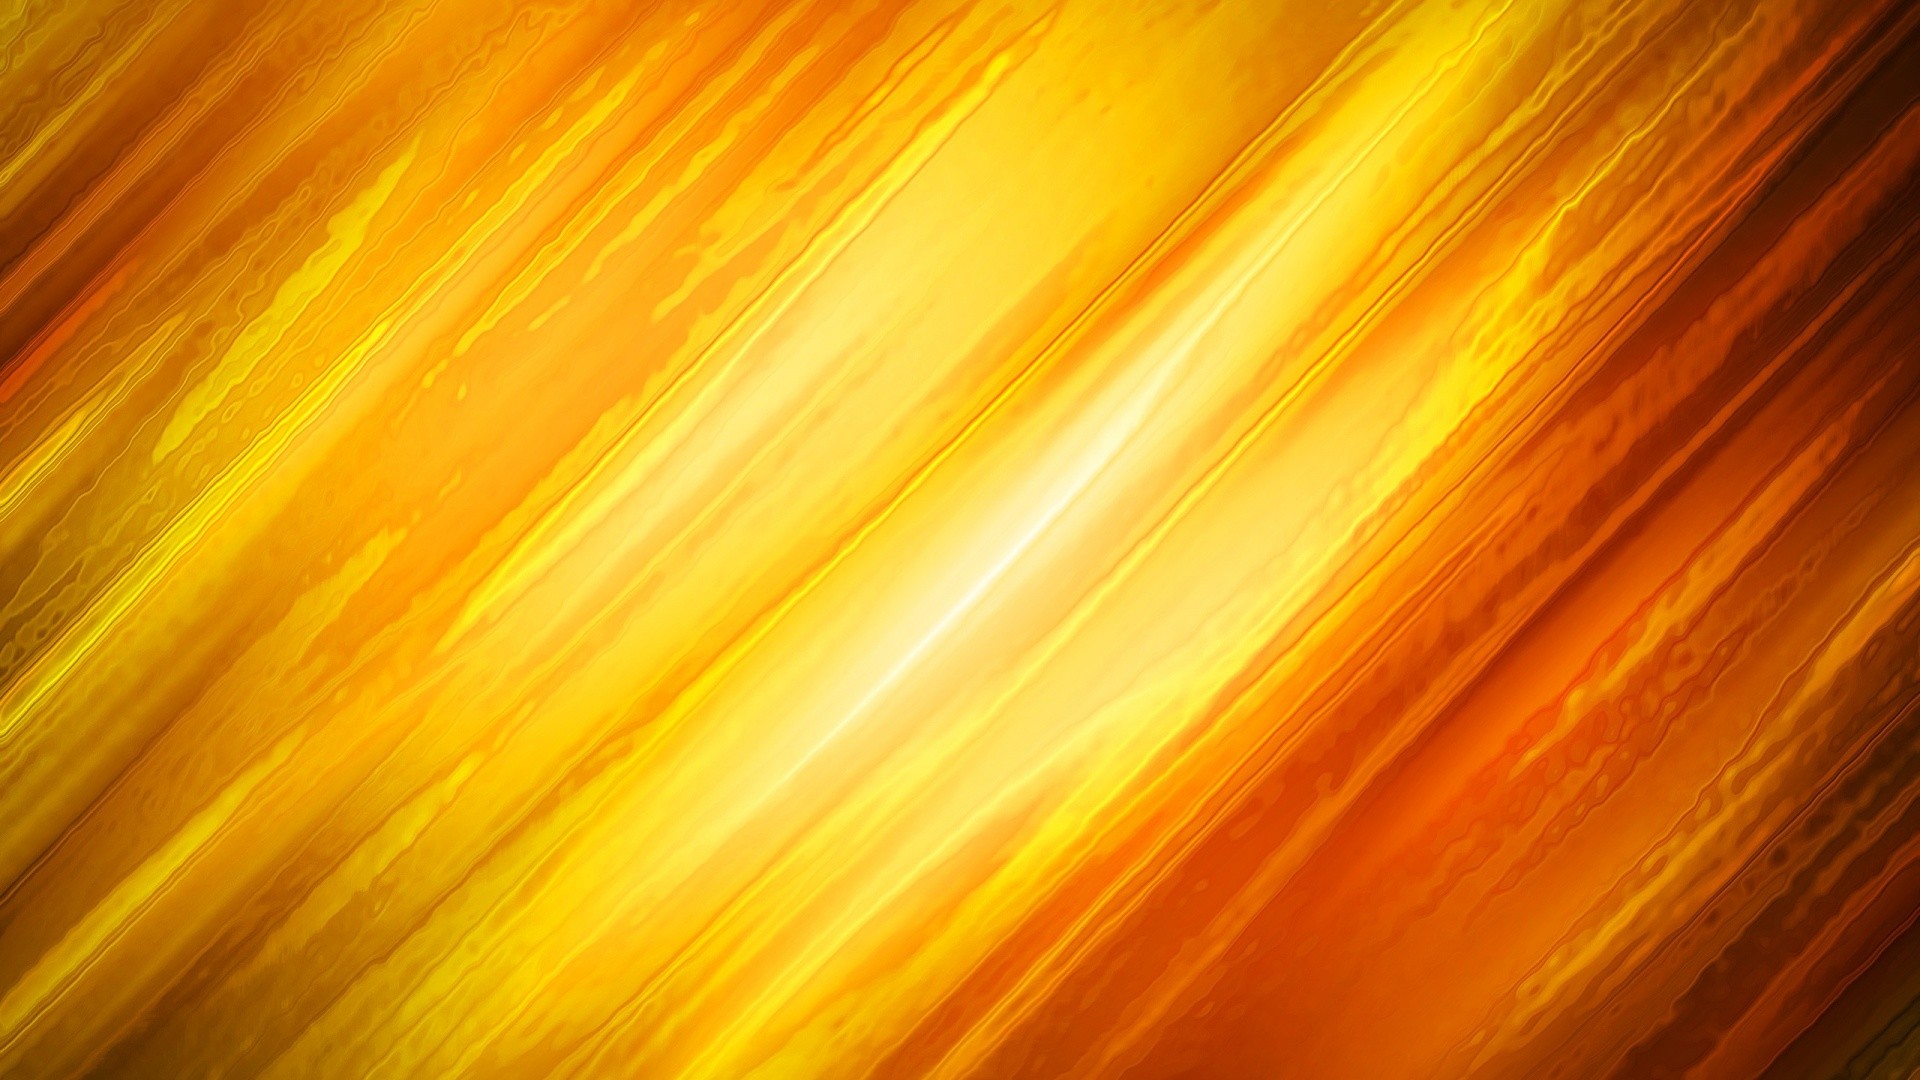 1920x1080 Orange Yellow Background wallpaper - 742489